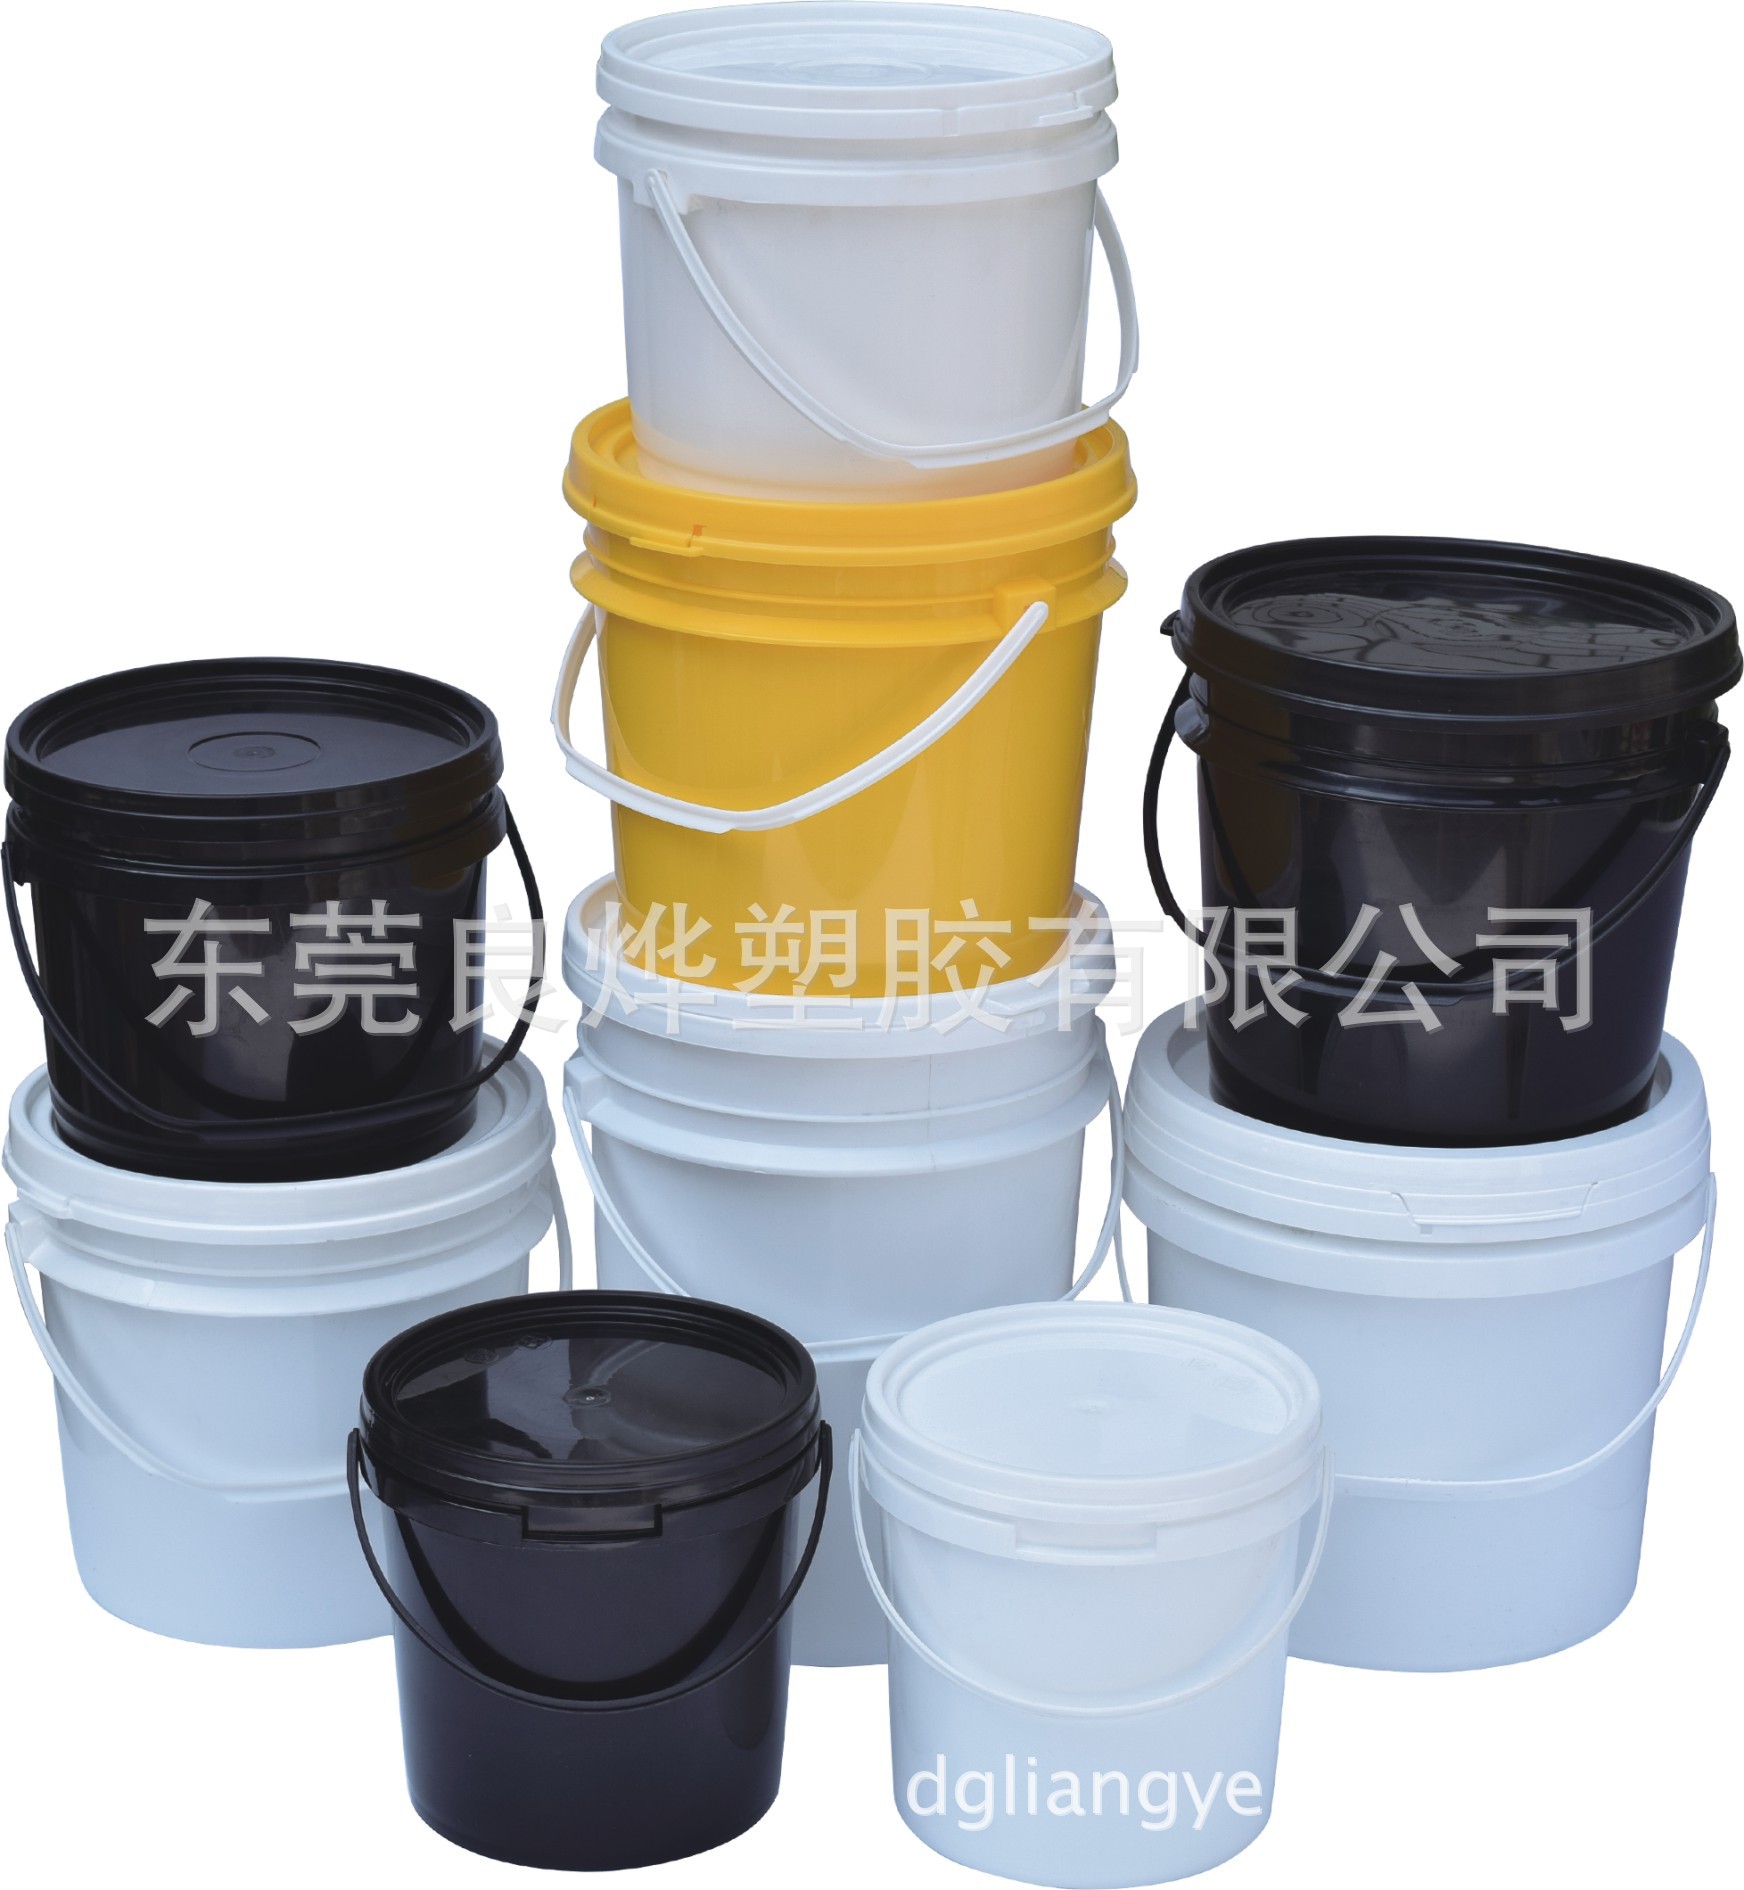 16L硅胶包装桶 耐用粘和剂 电子材料包装桶选择门道 供应硅胶包装桶图片